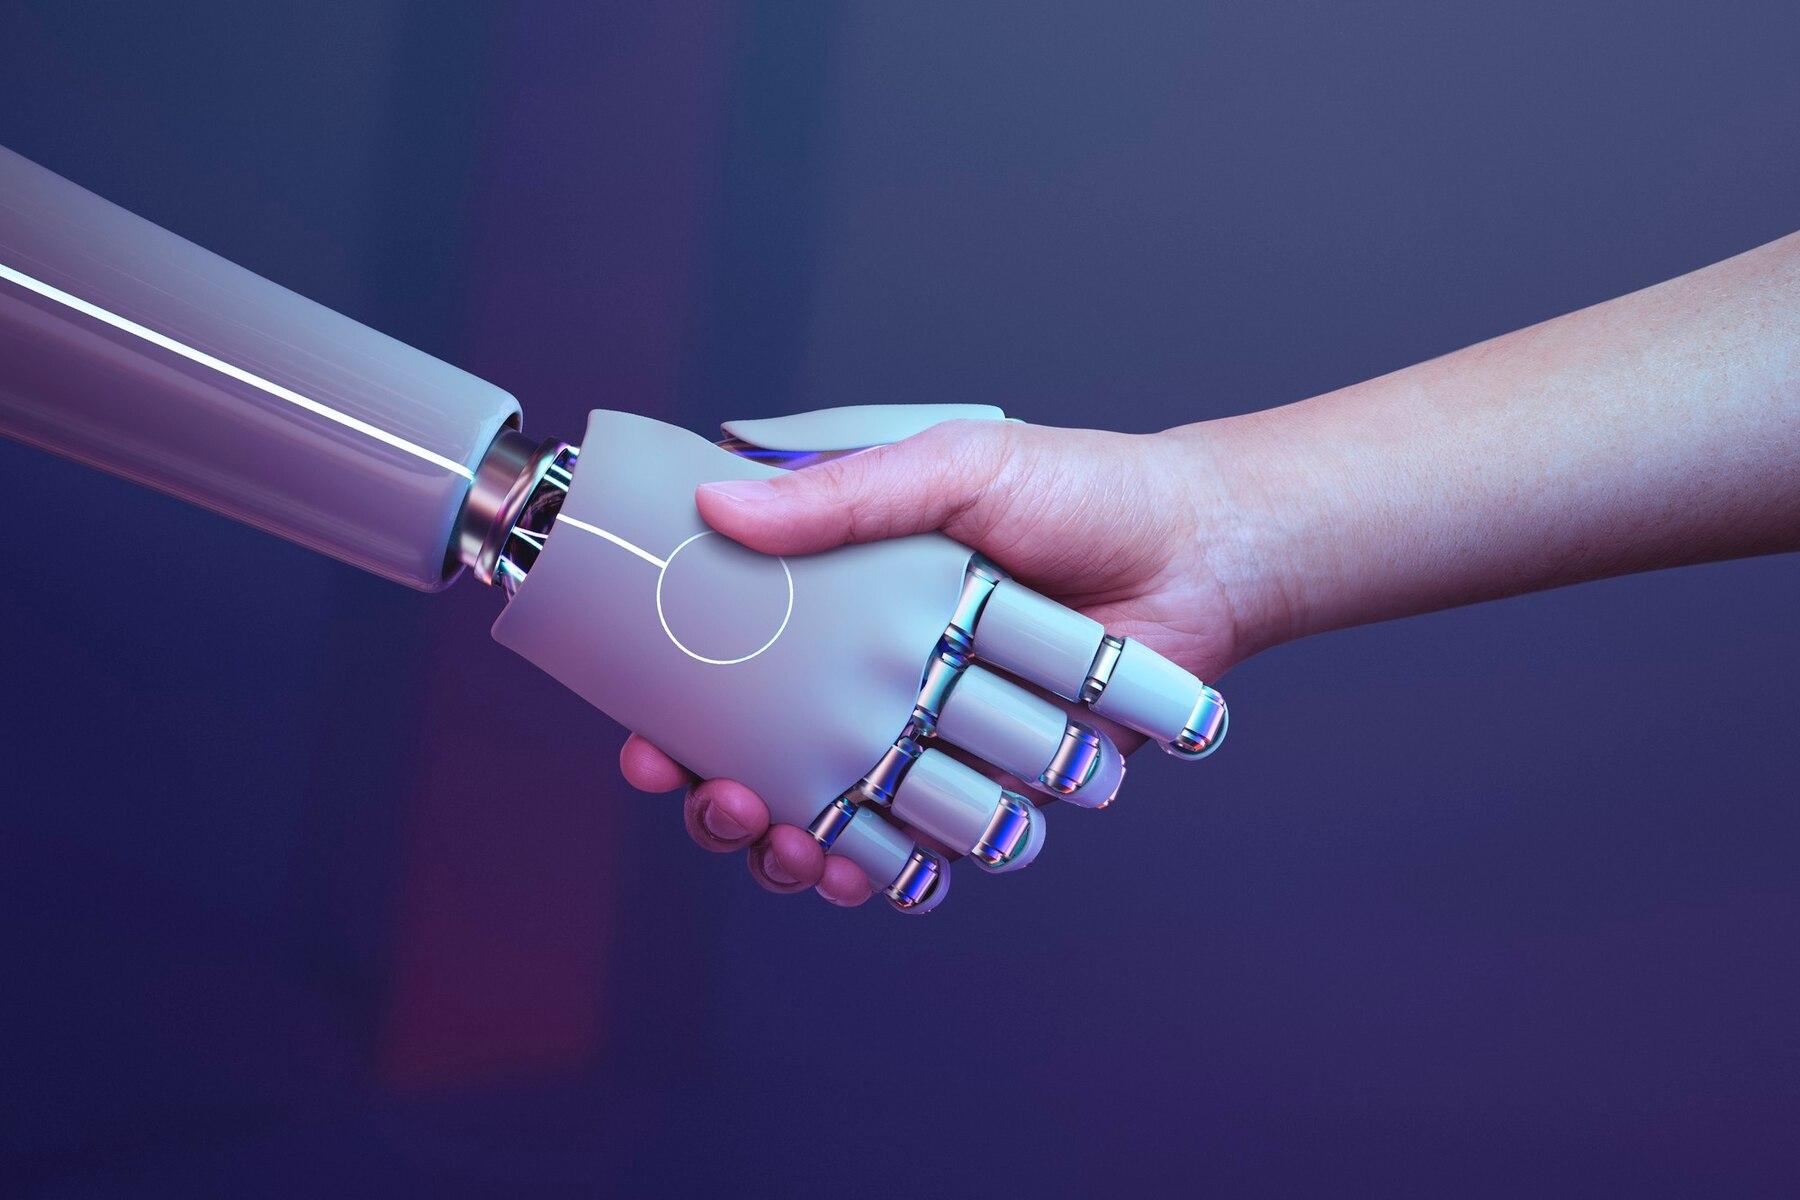 robot-handshake-human-background-futuristic-digital-age_53876-129770.jpg